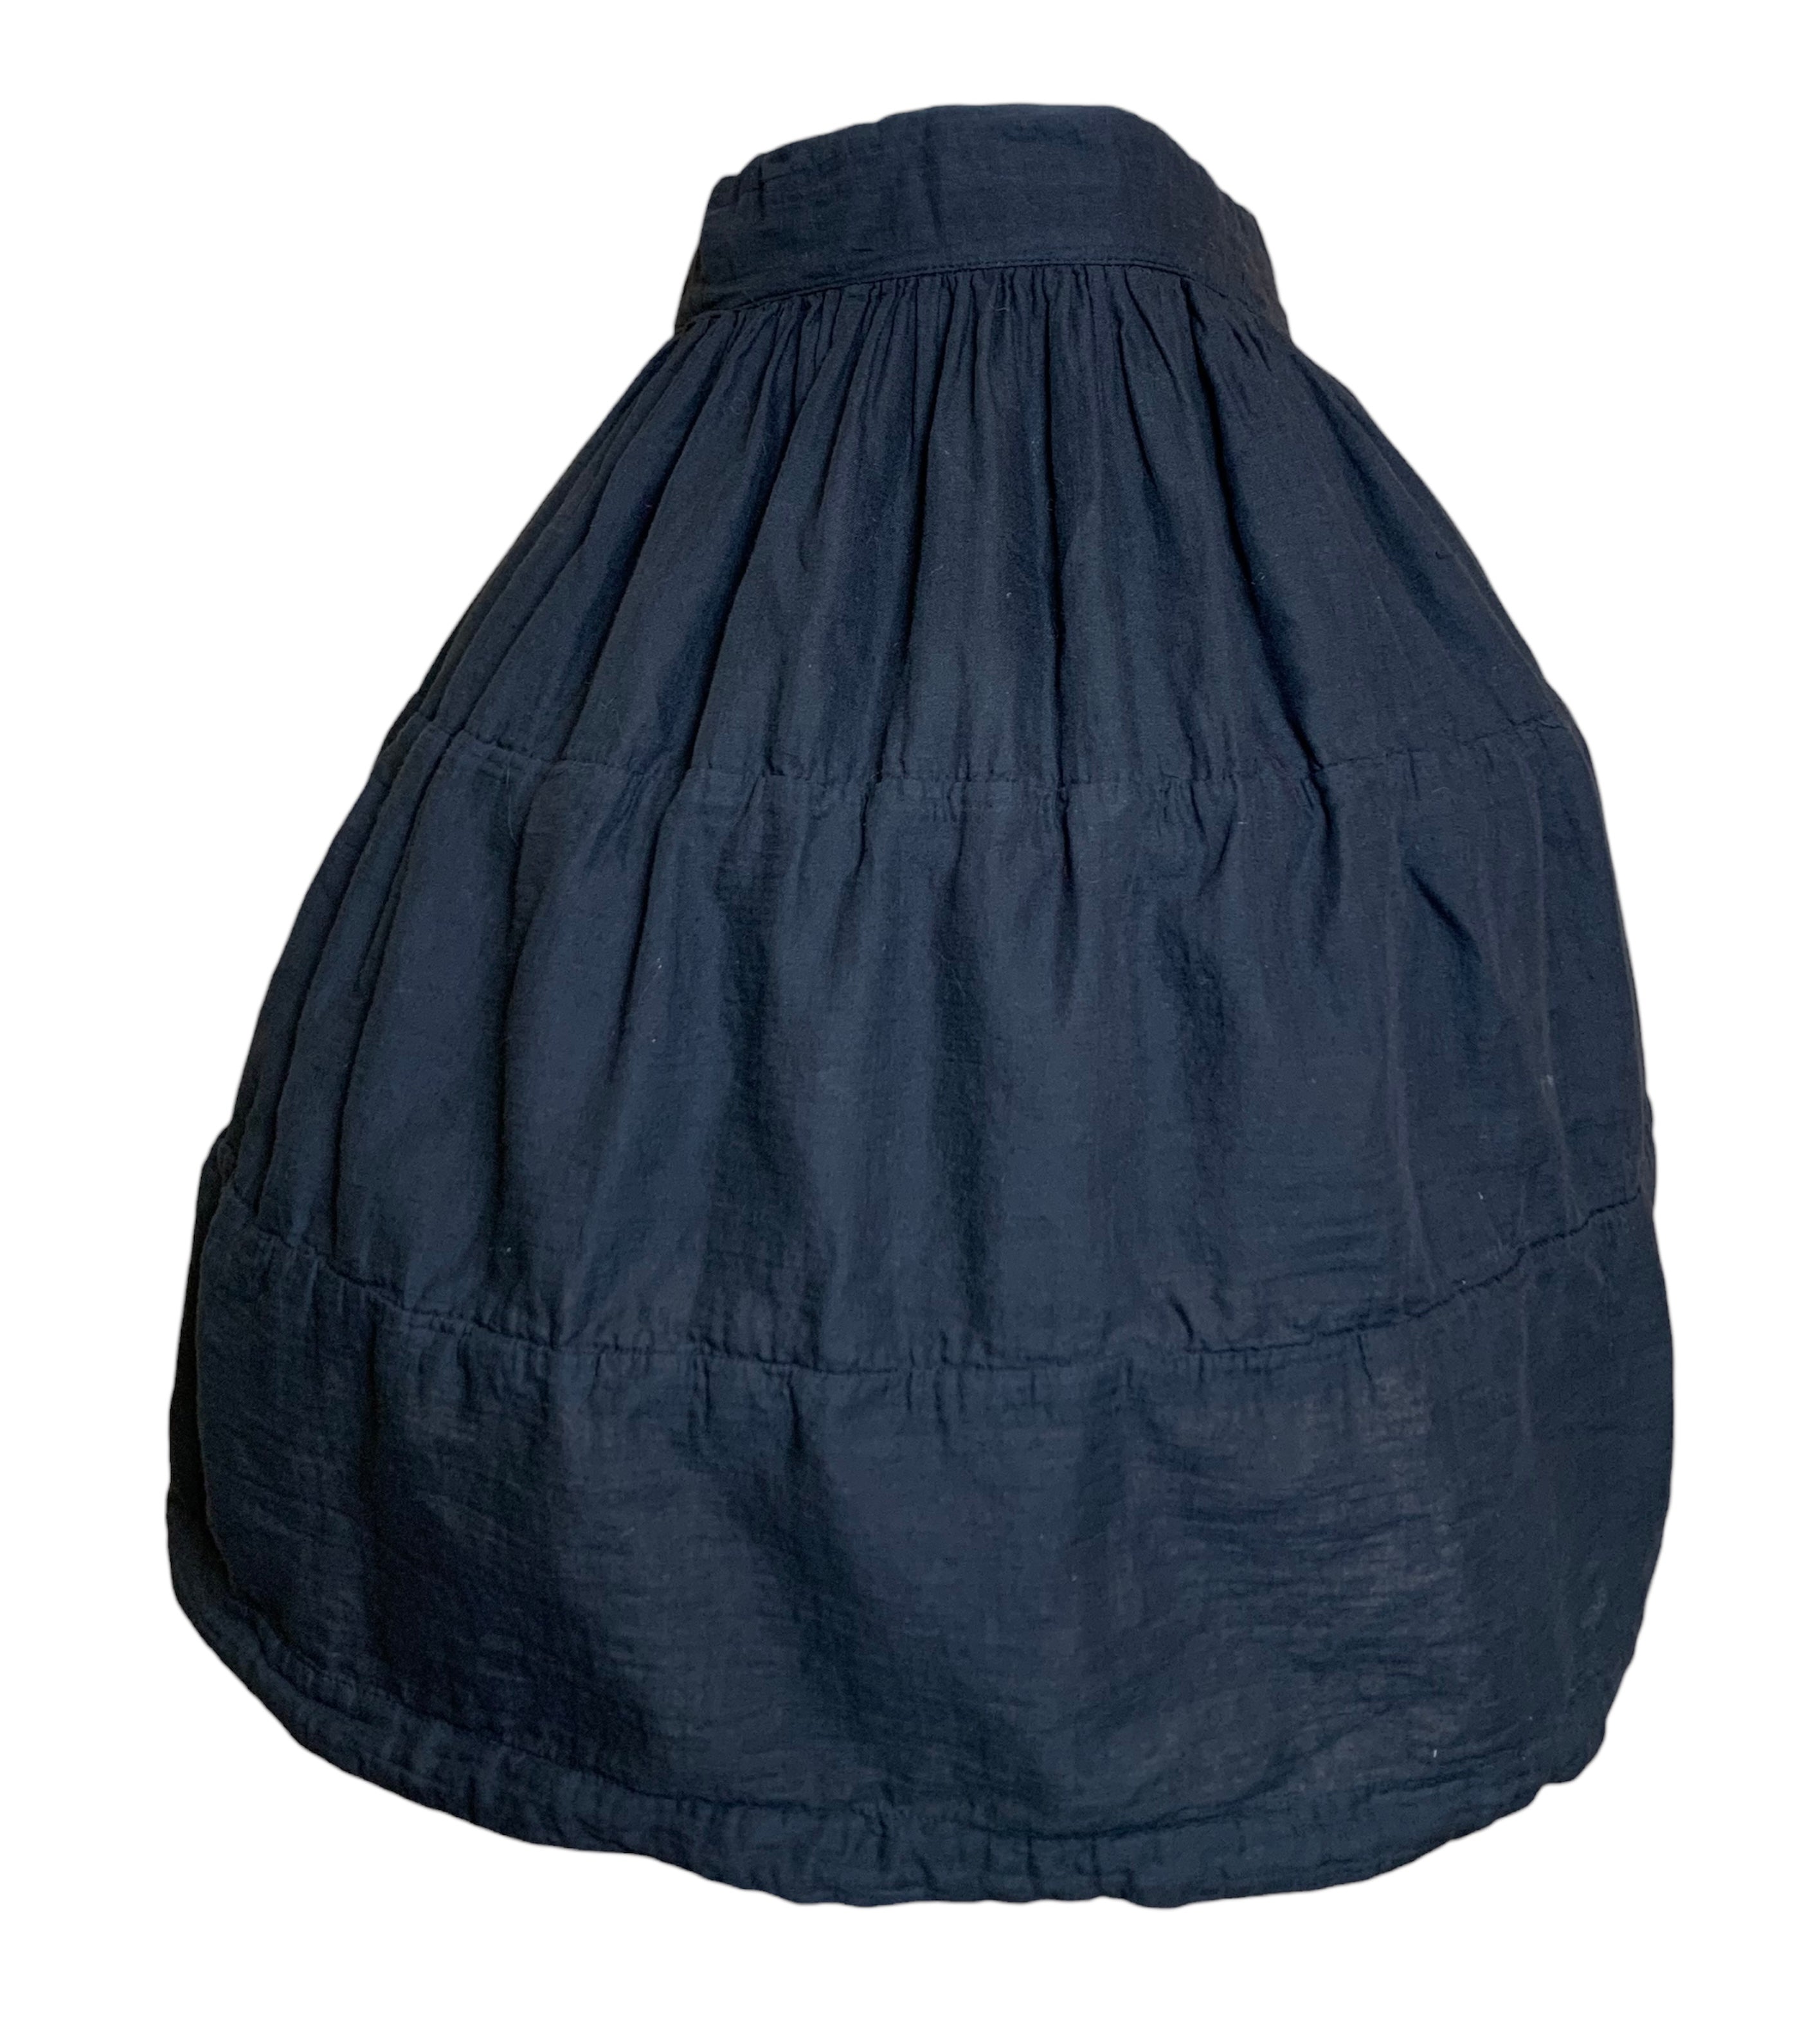 Vivienne Westwood Anglomania Black Cotton Mini Crini Skirt SIDE 2/5